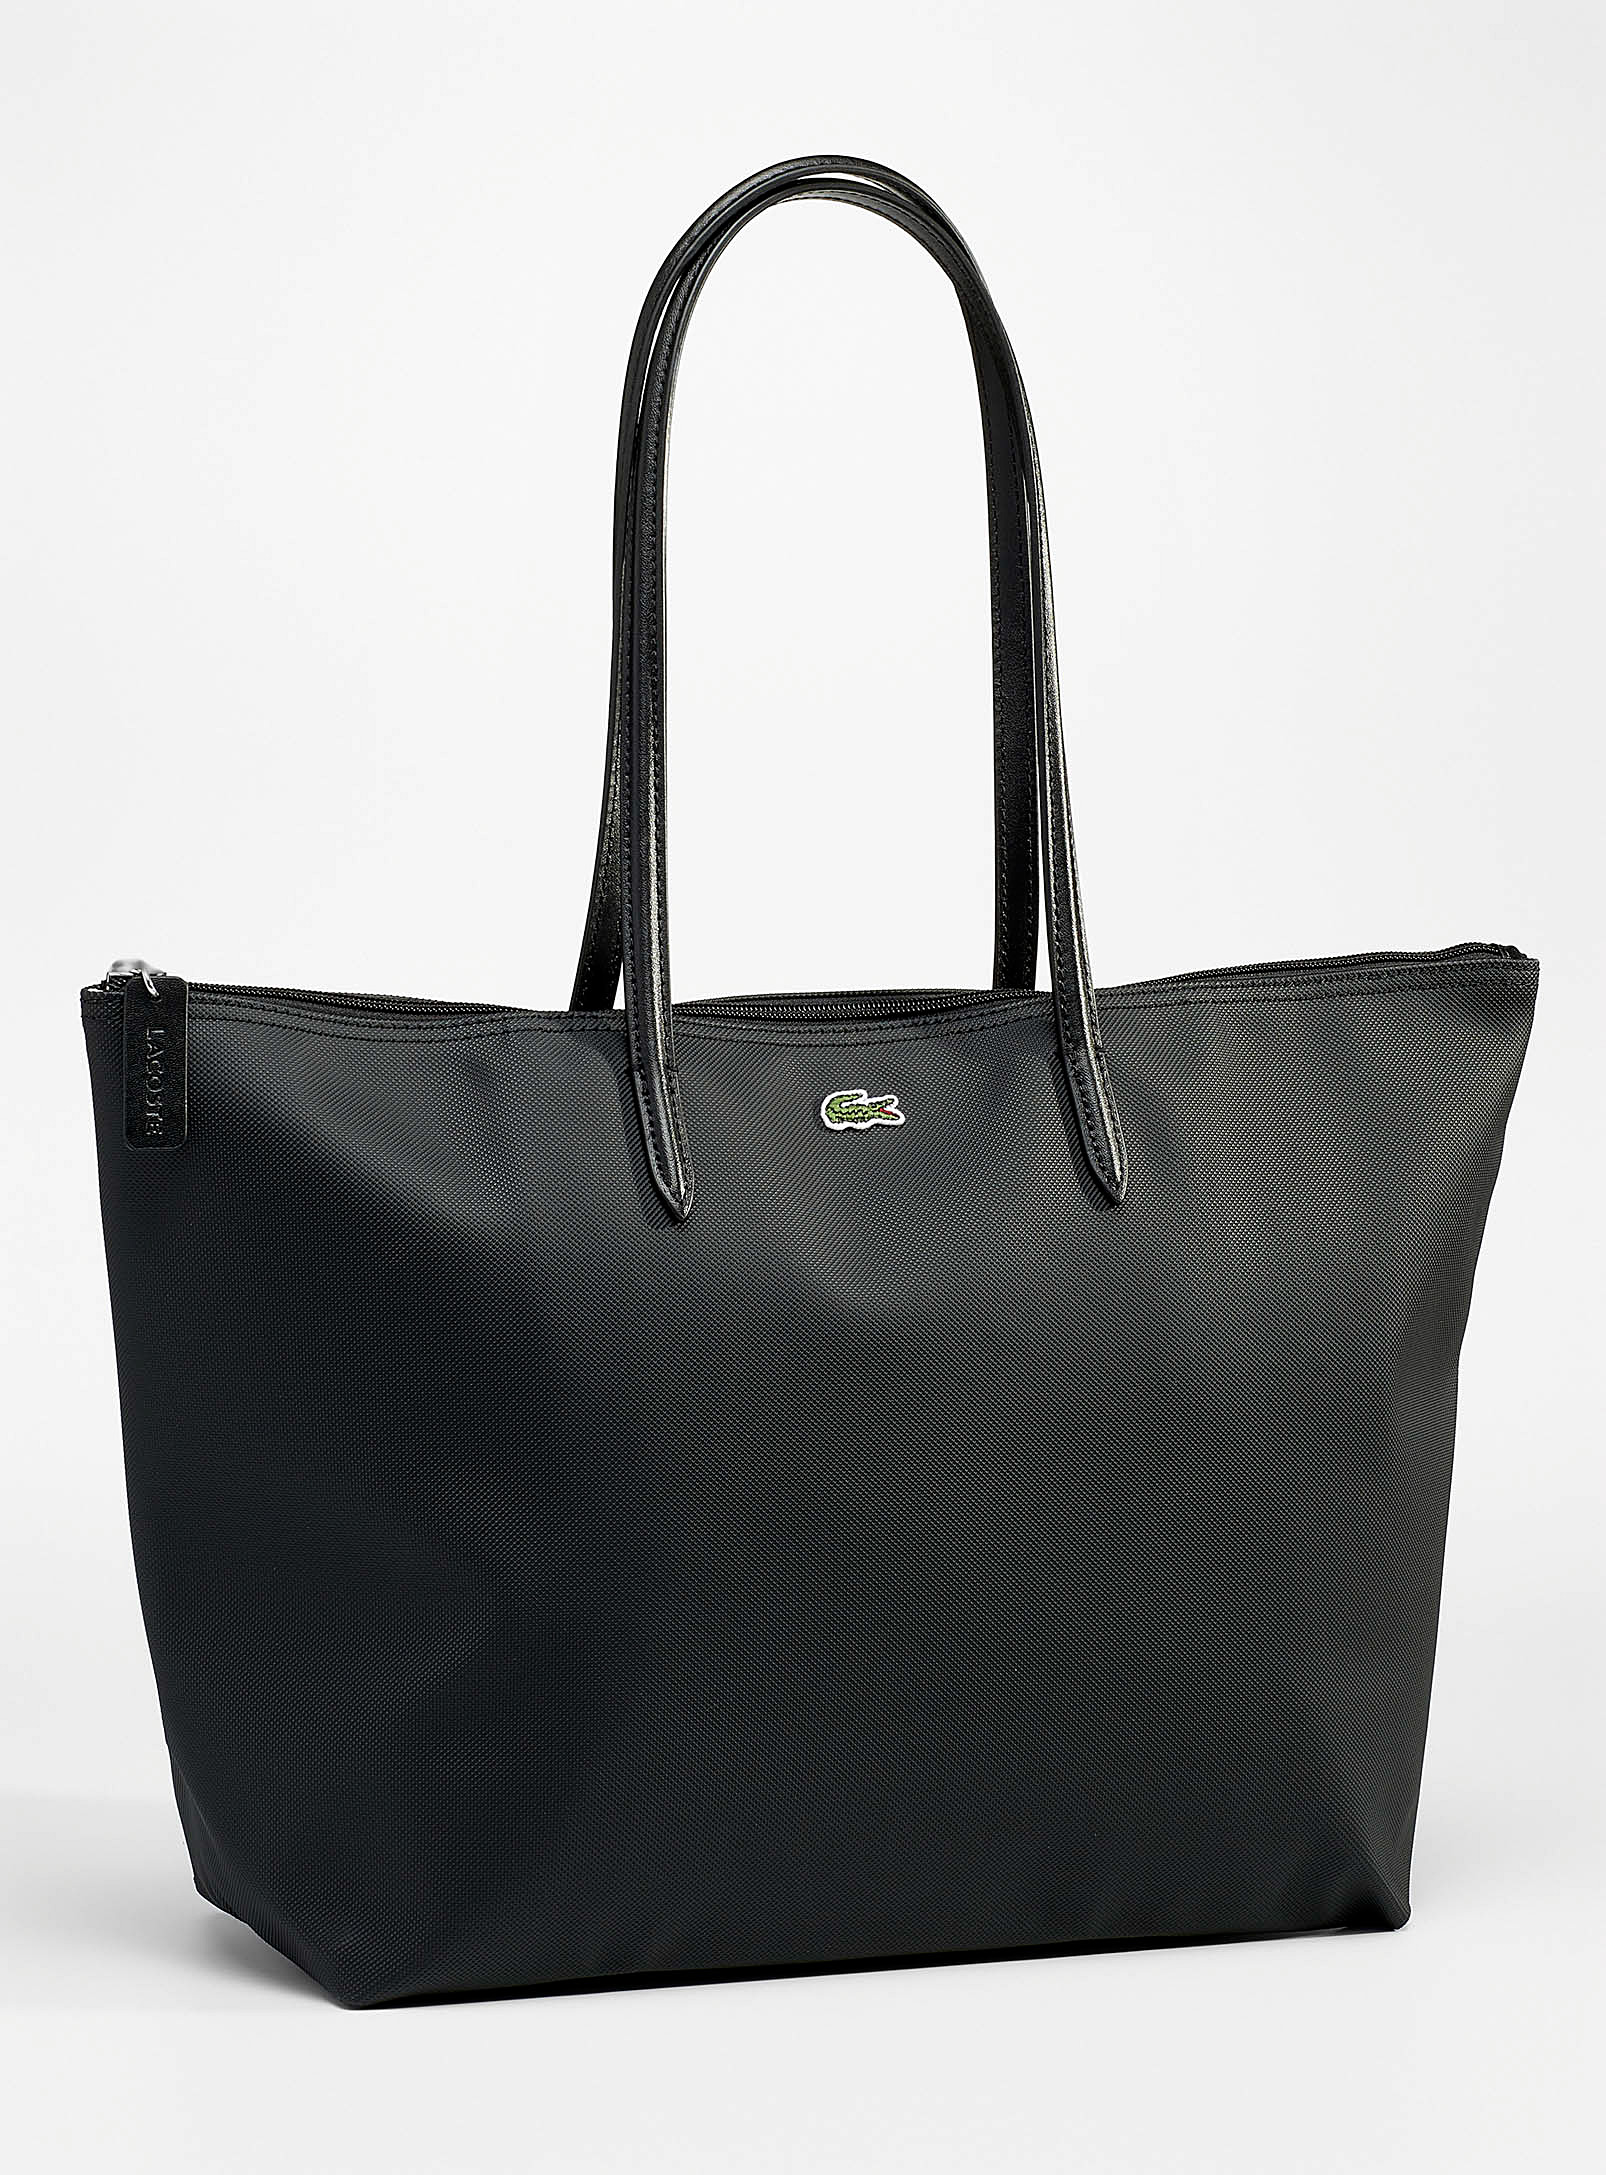 Lacoste - Women's Concept zip Tote Bag